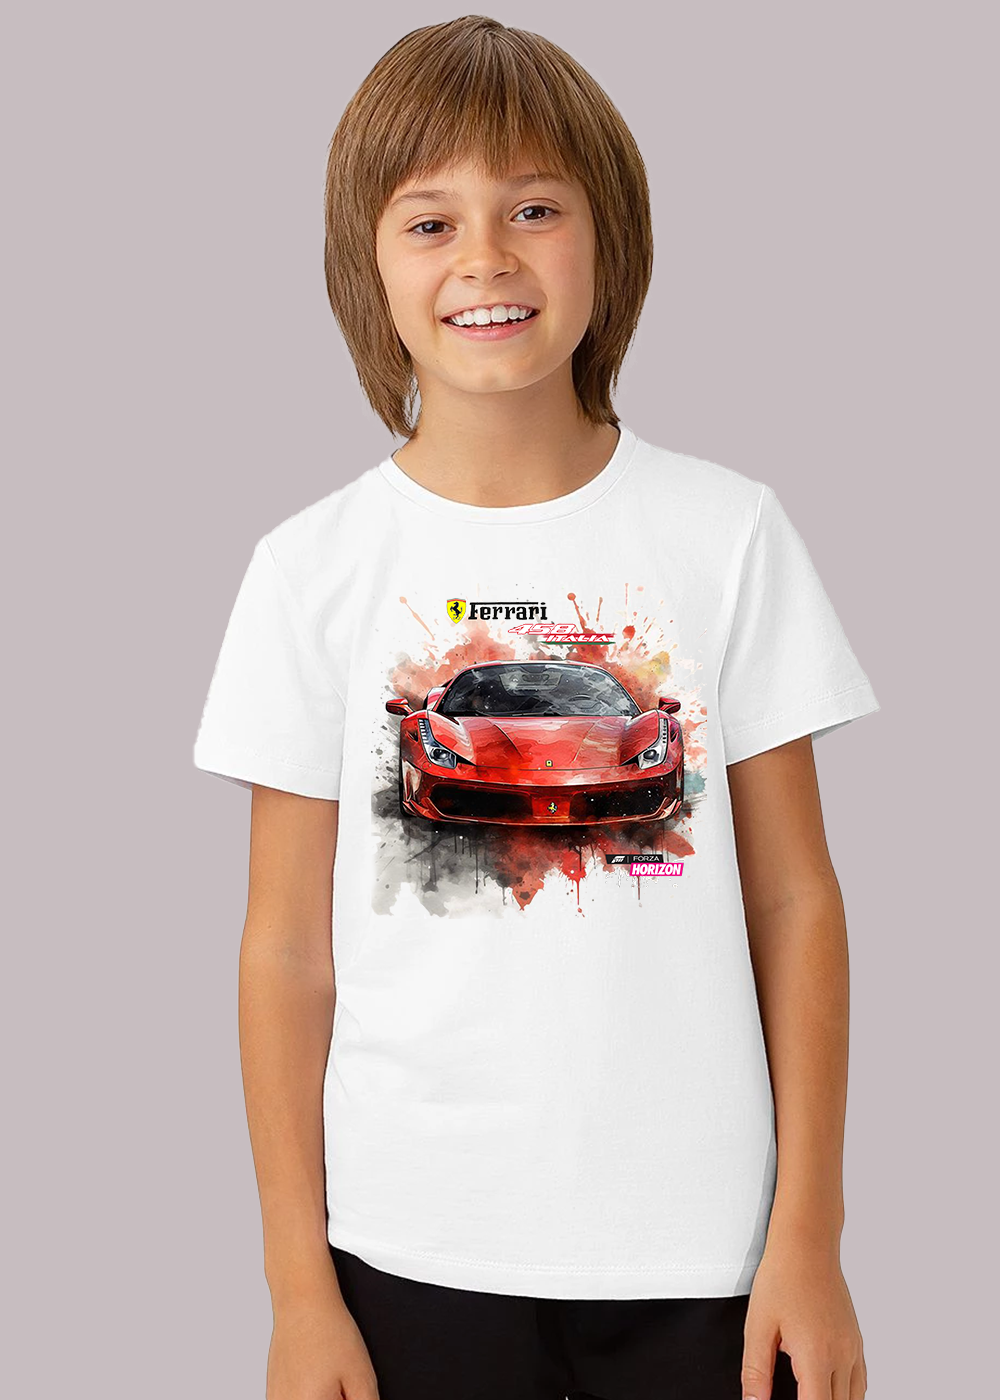 T-Shirt Infantil Ferrari 458 Italia made by Supernova®